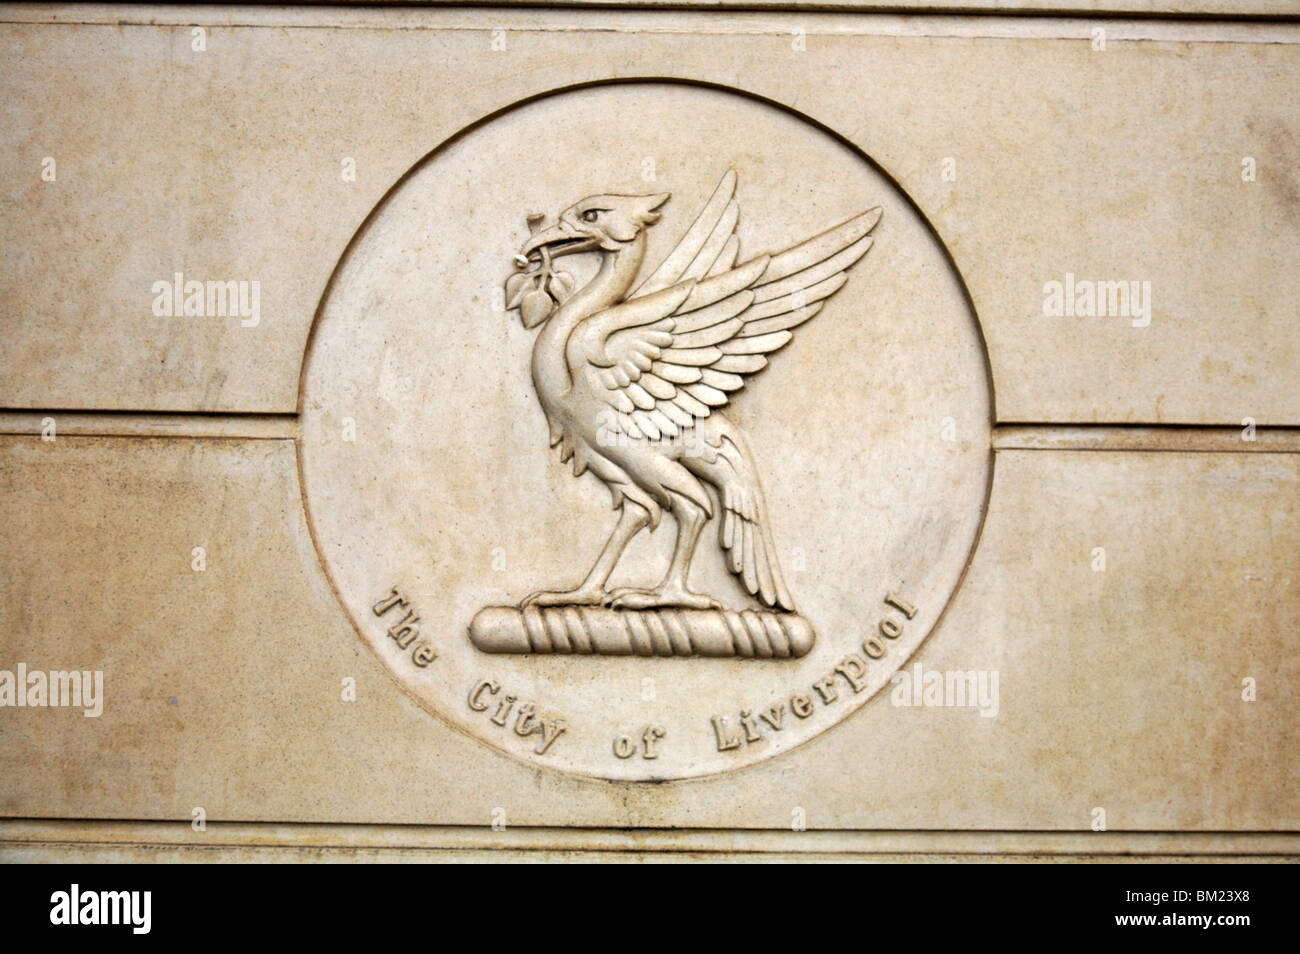 Liver bird symbol for Liverpool UK Stock Photo